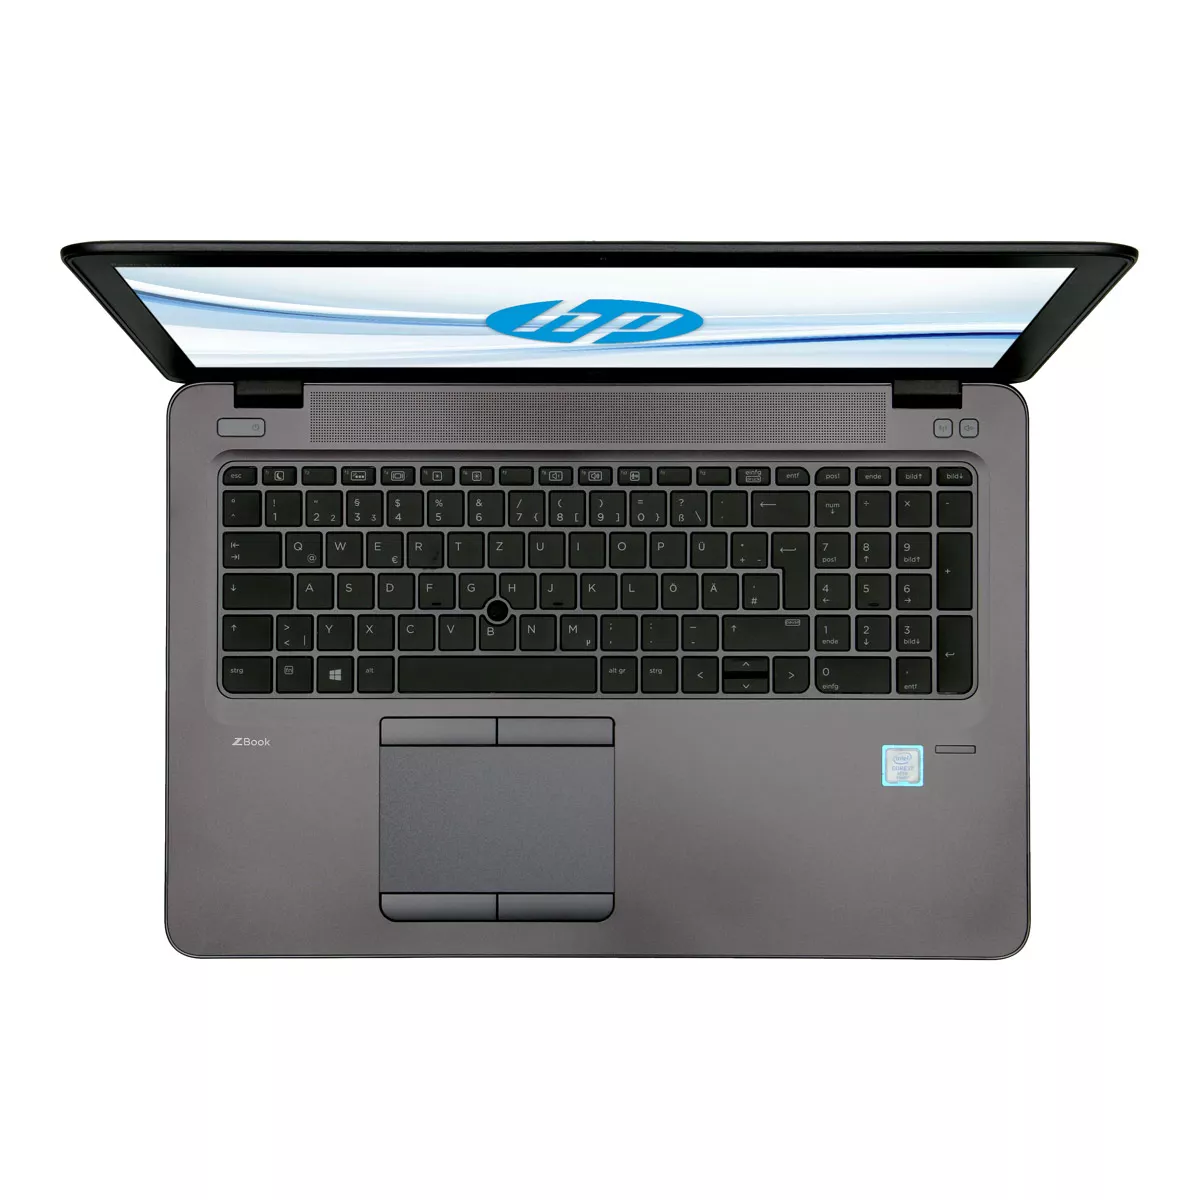 HP ZBook 15u G3 Core i7 6600U AMD Radeon R7 Full-HD 16 GB 500 GB M.2 SSD Webcam B-Ware